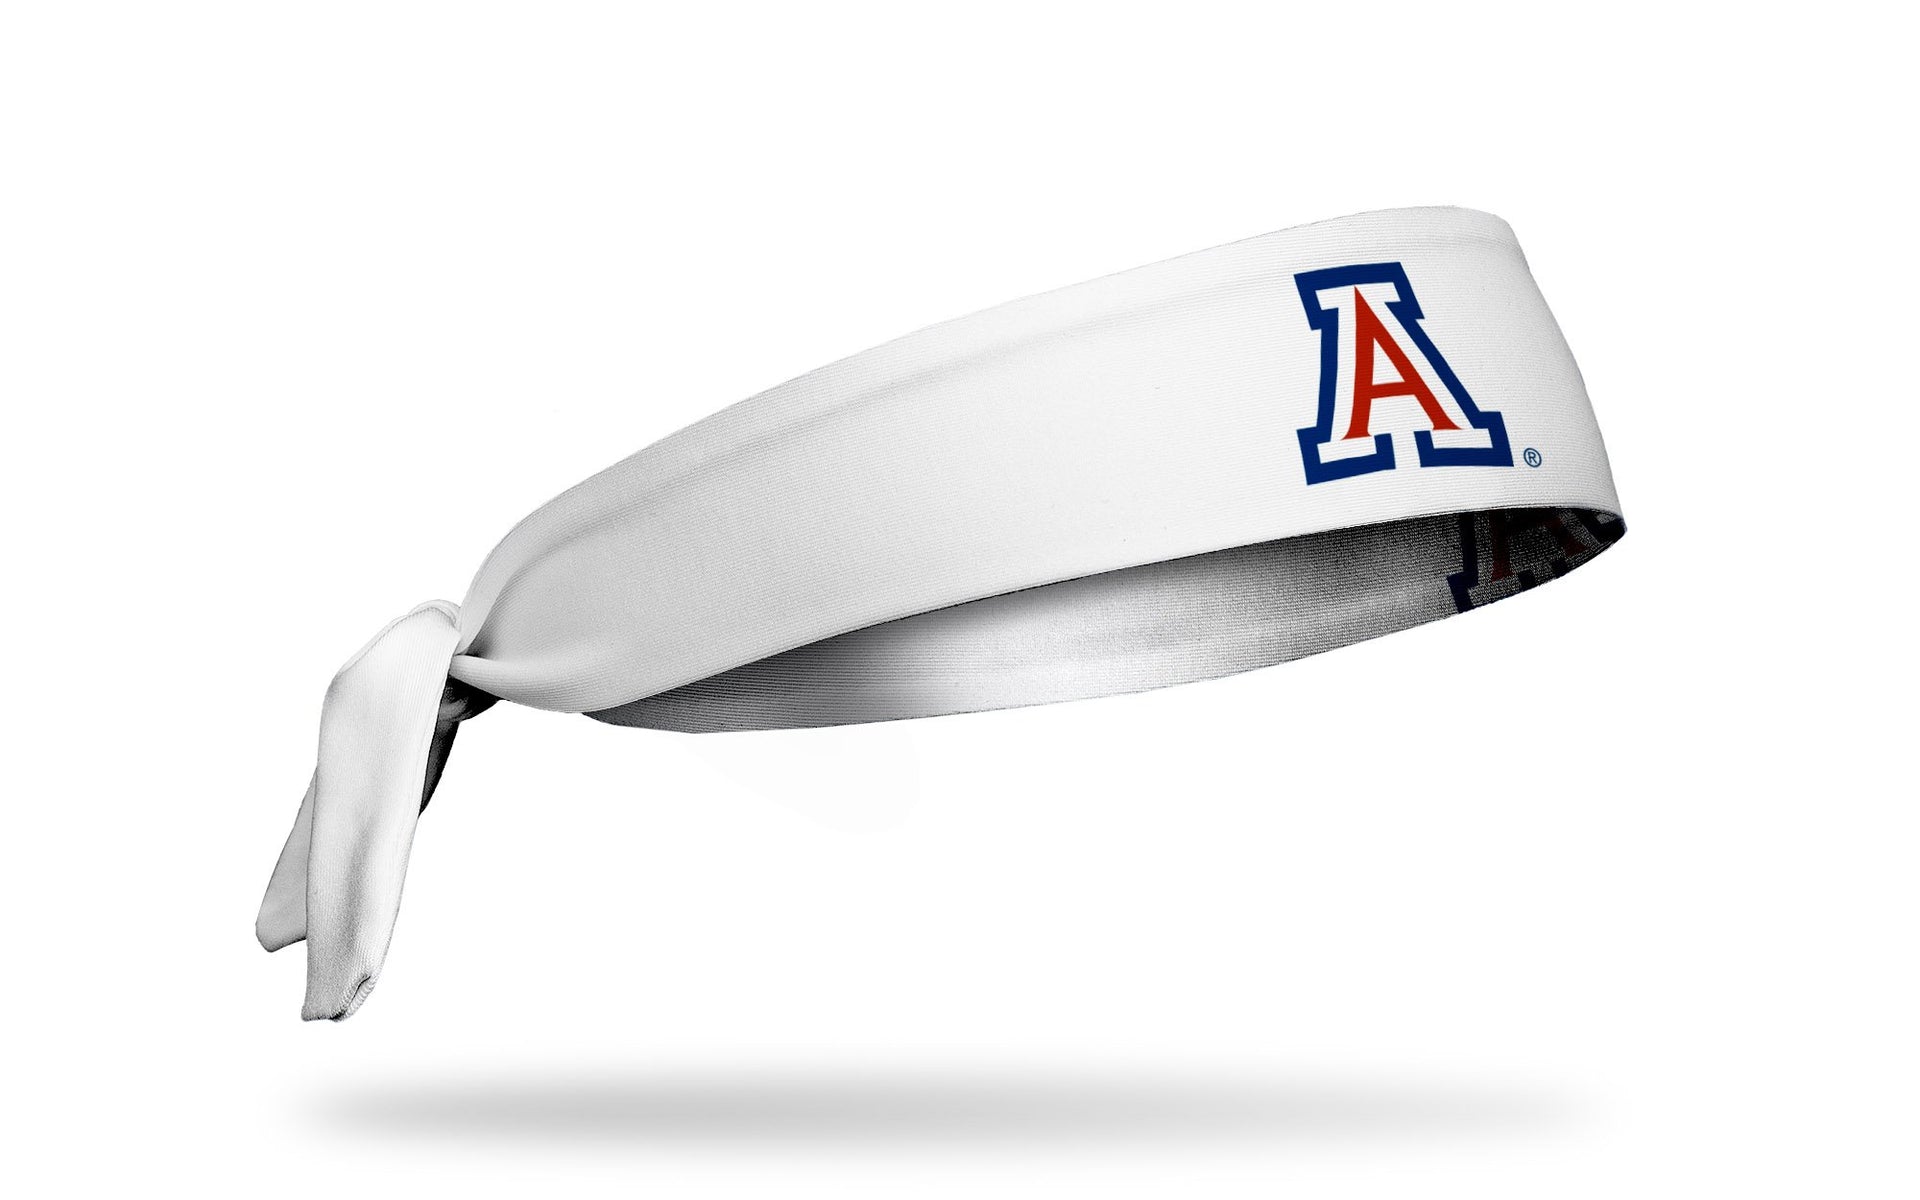 University of Arizona: A Logo White Tie Headband - View 2